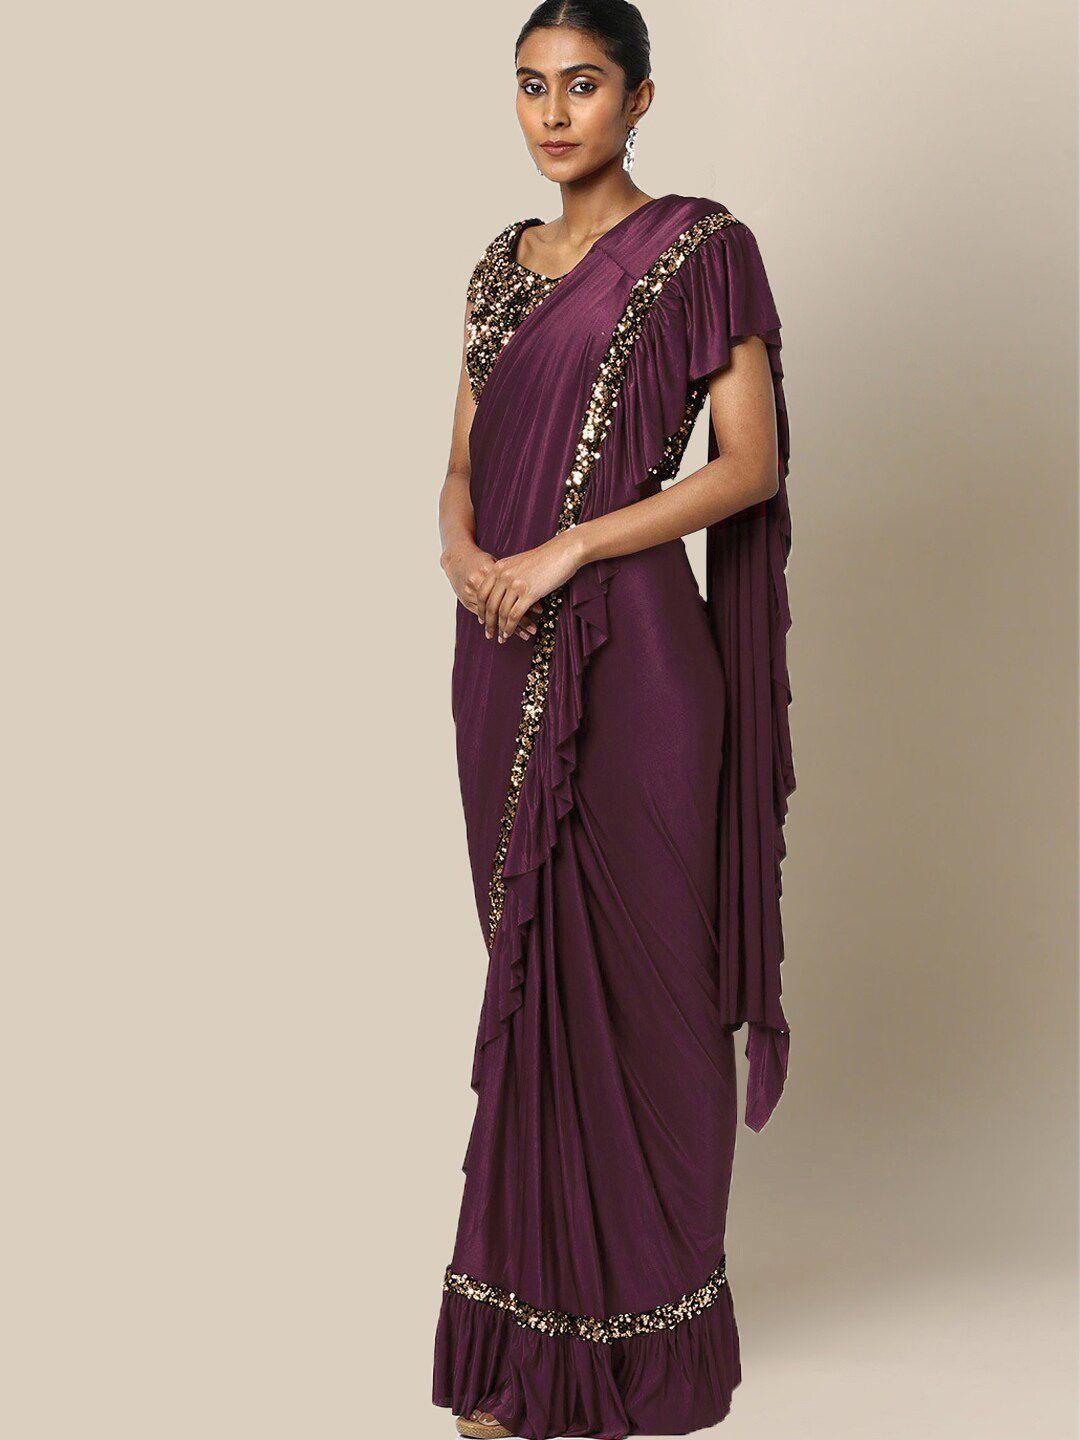 chhabra 555 women purple embellished ruffled ready to wear saree